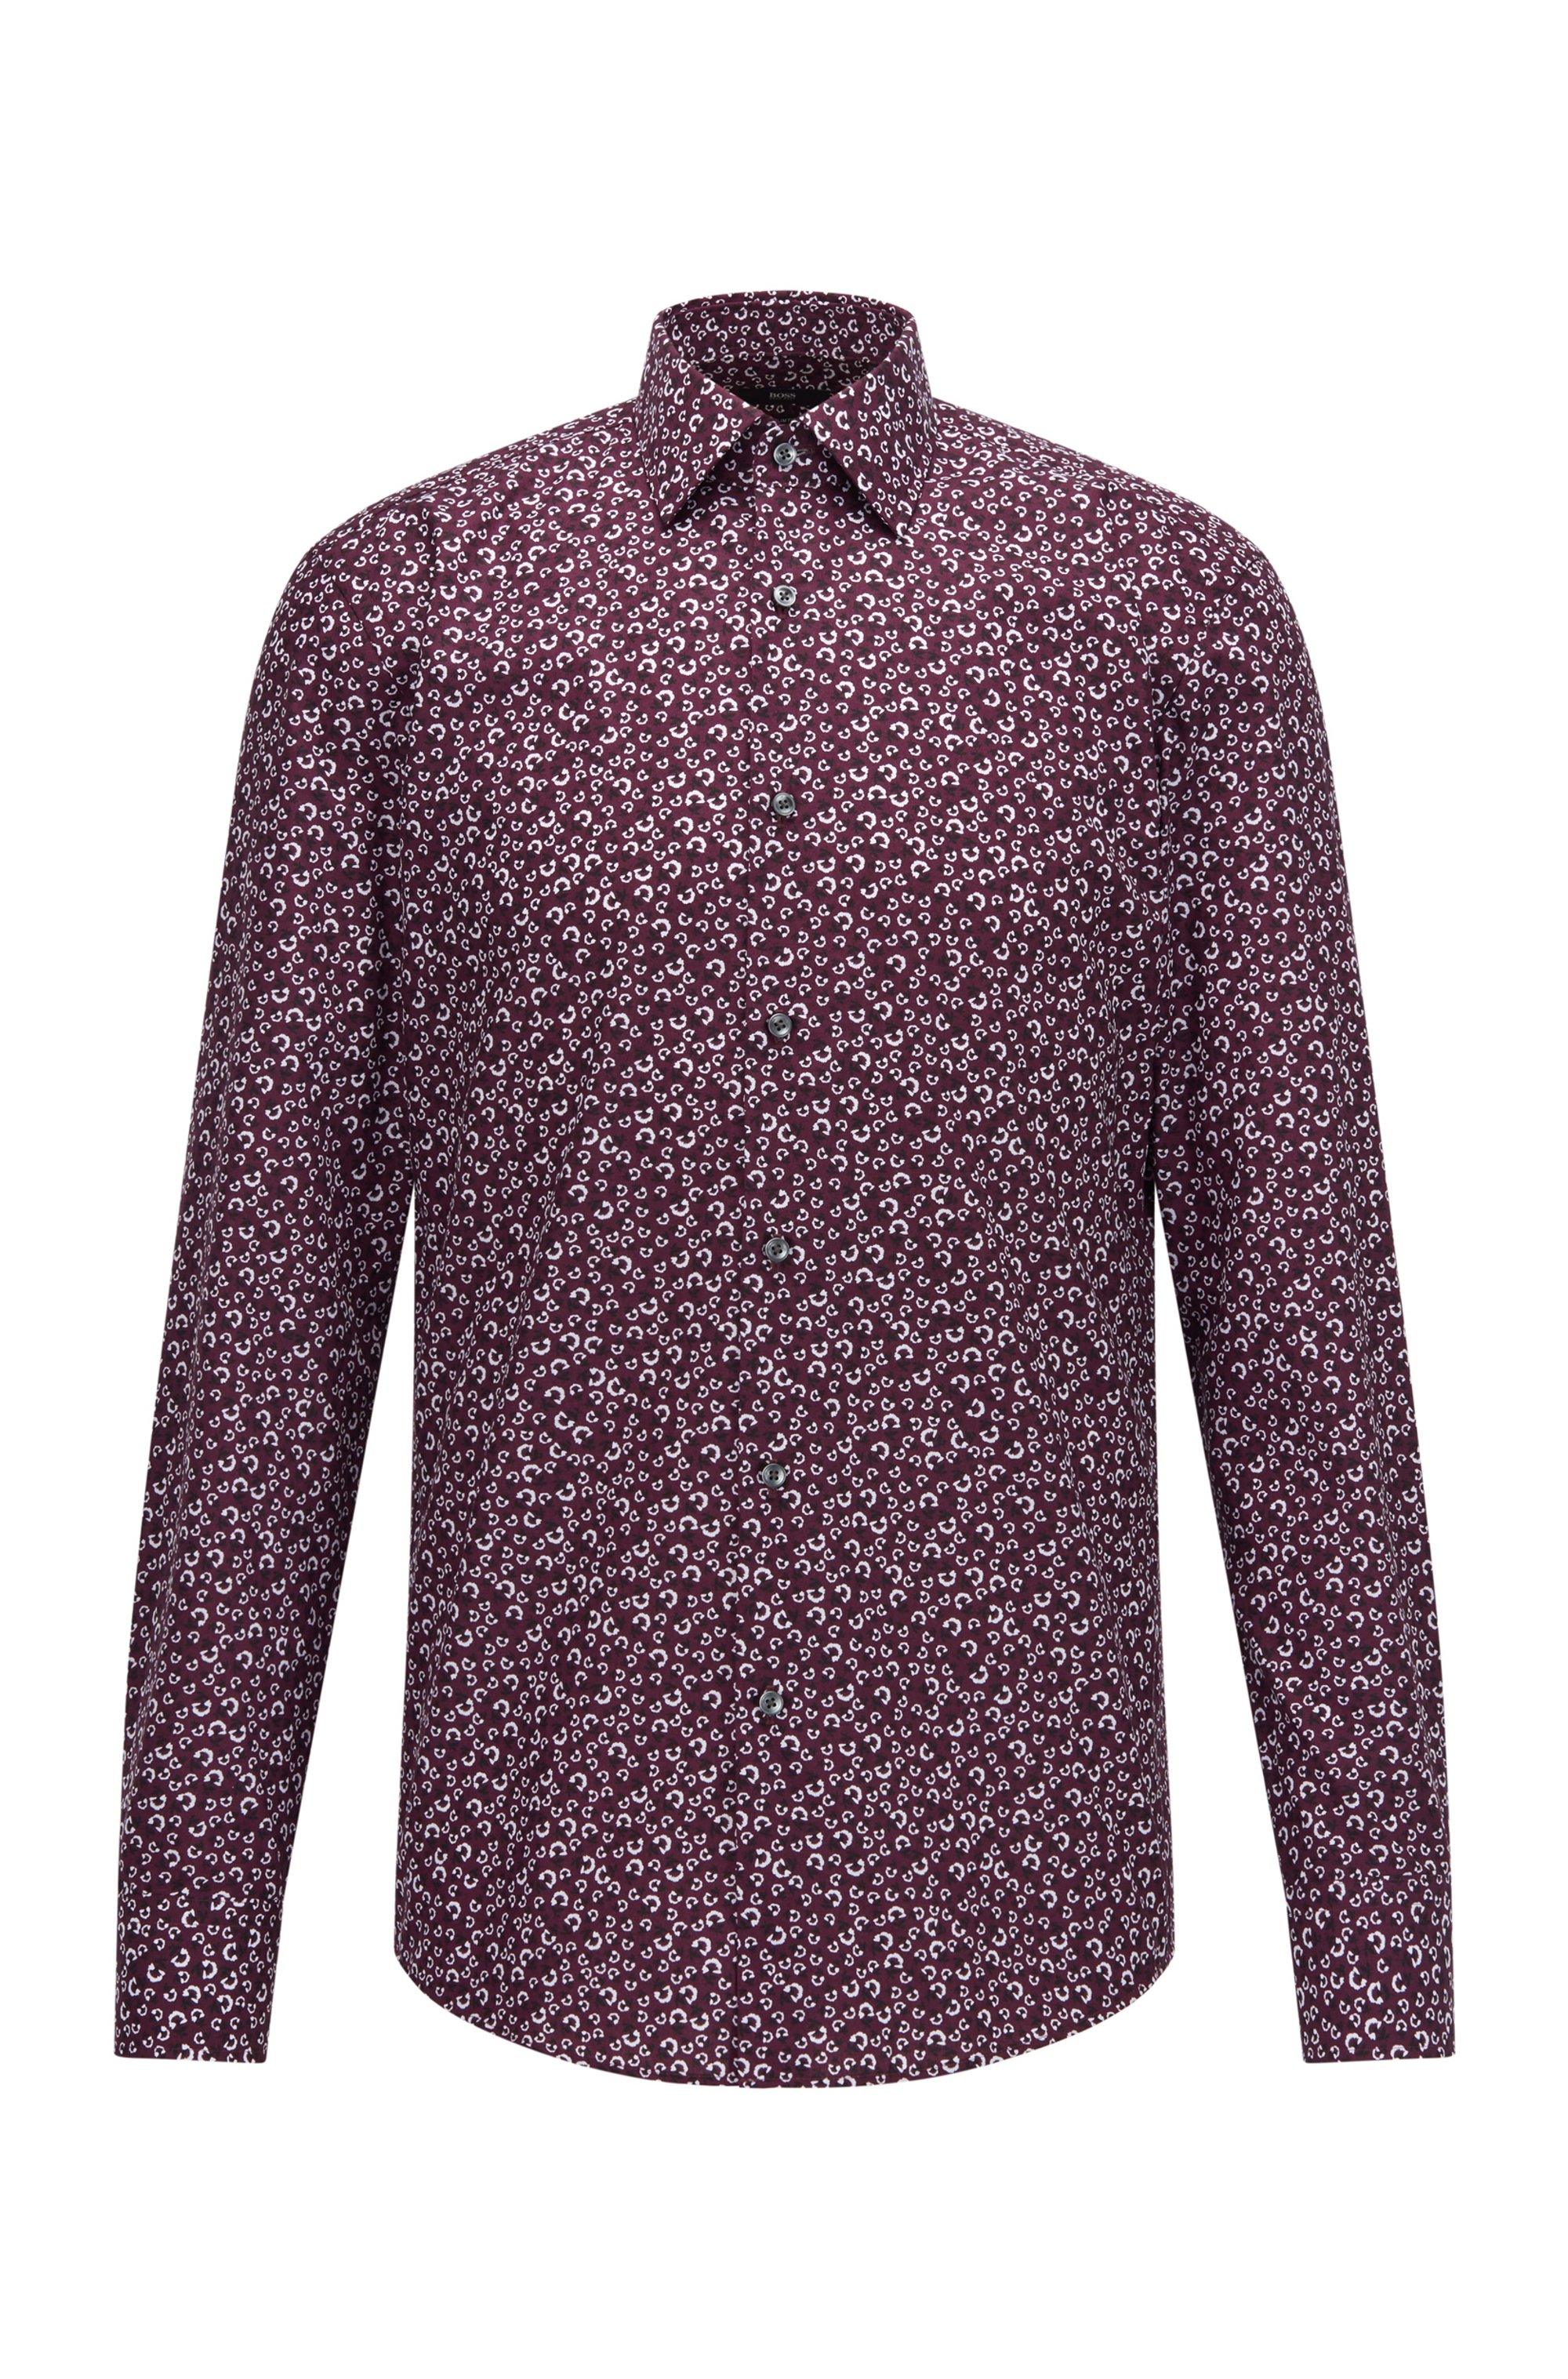 Slim-fit shirt in printed cotton poplin, Purple